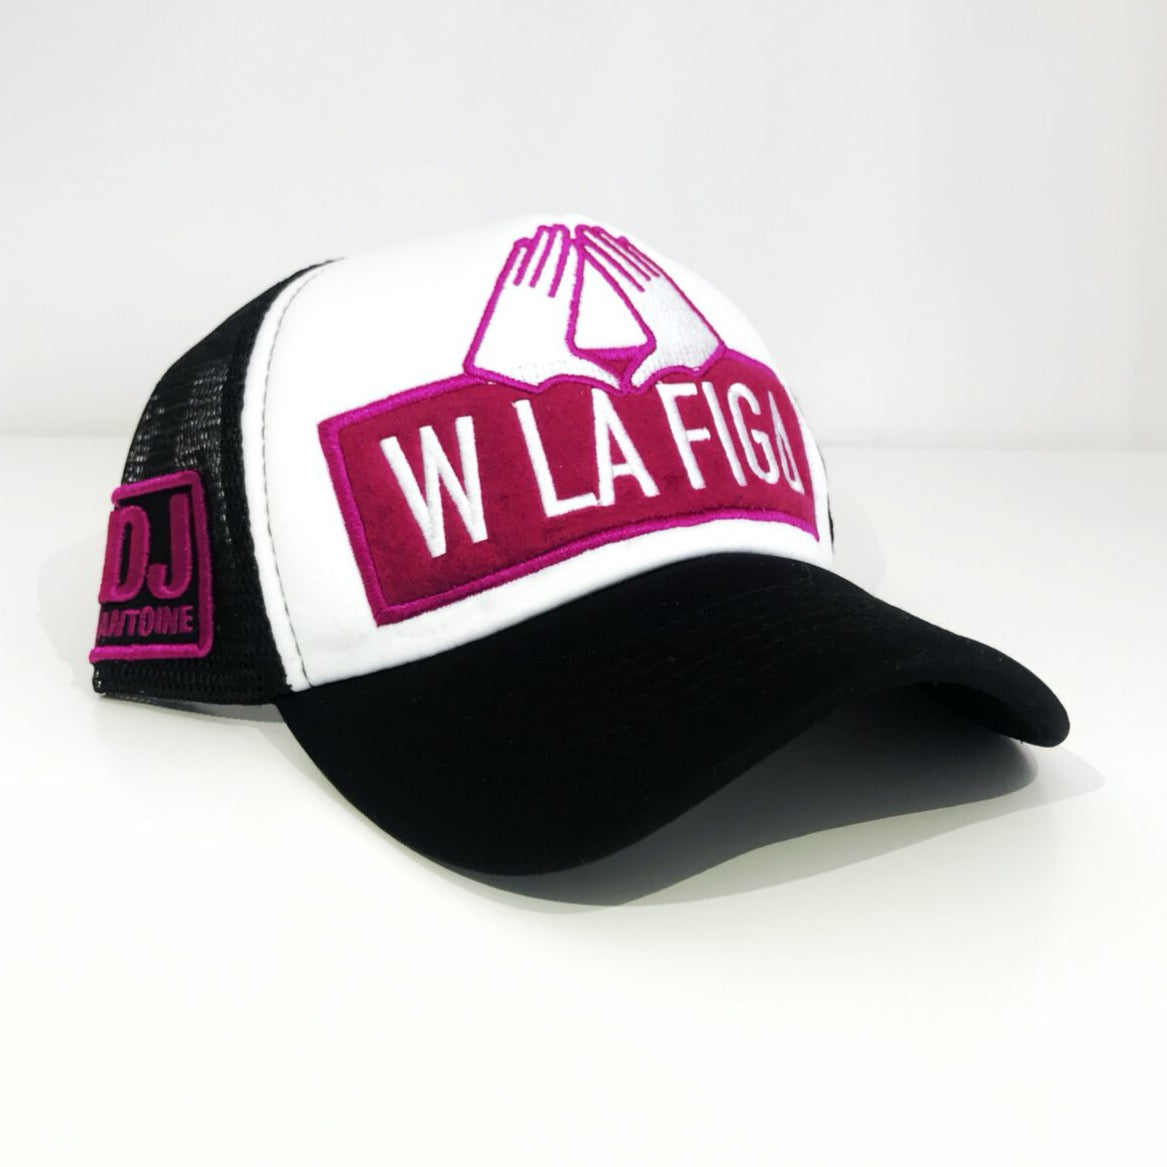 DJ ANTOINE CAP "W LA FIGA"